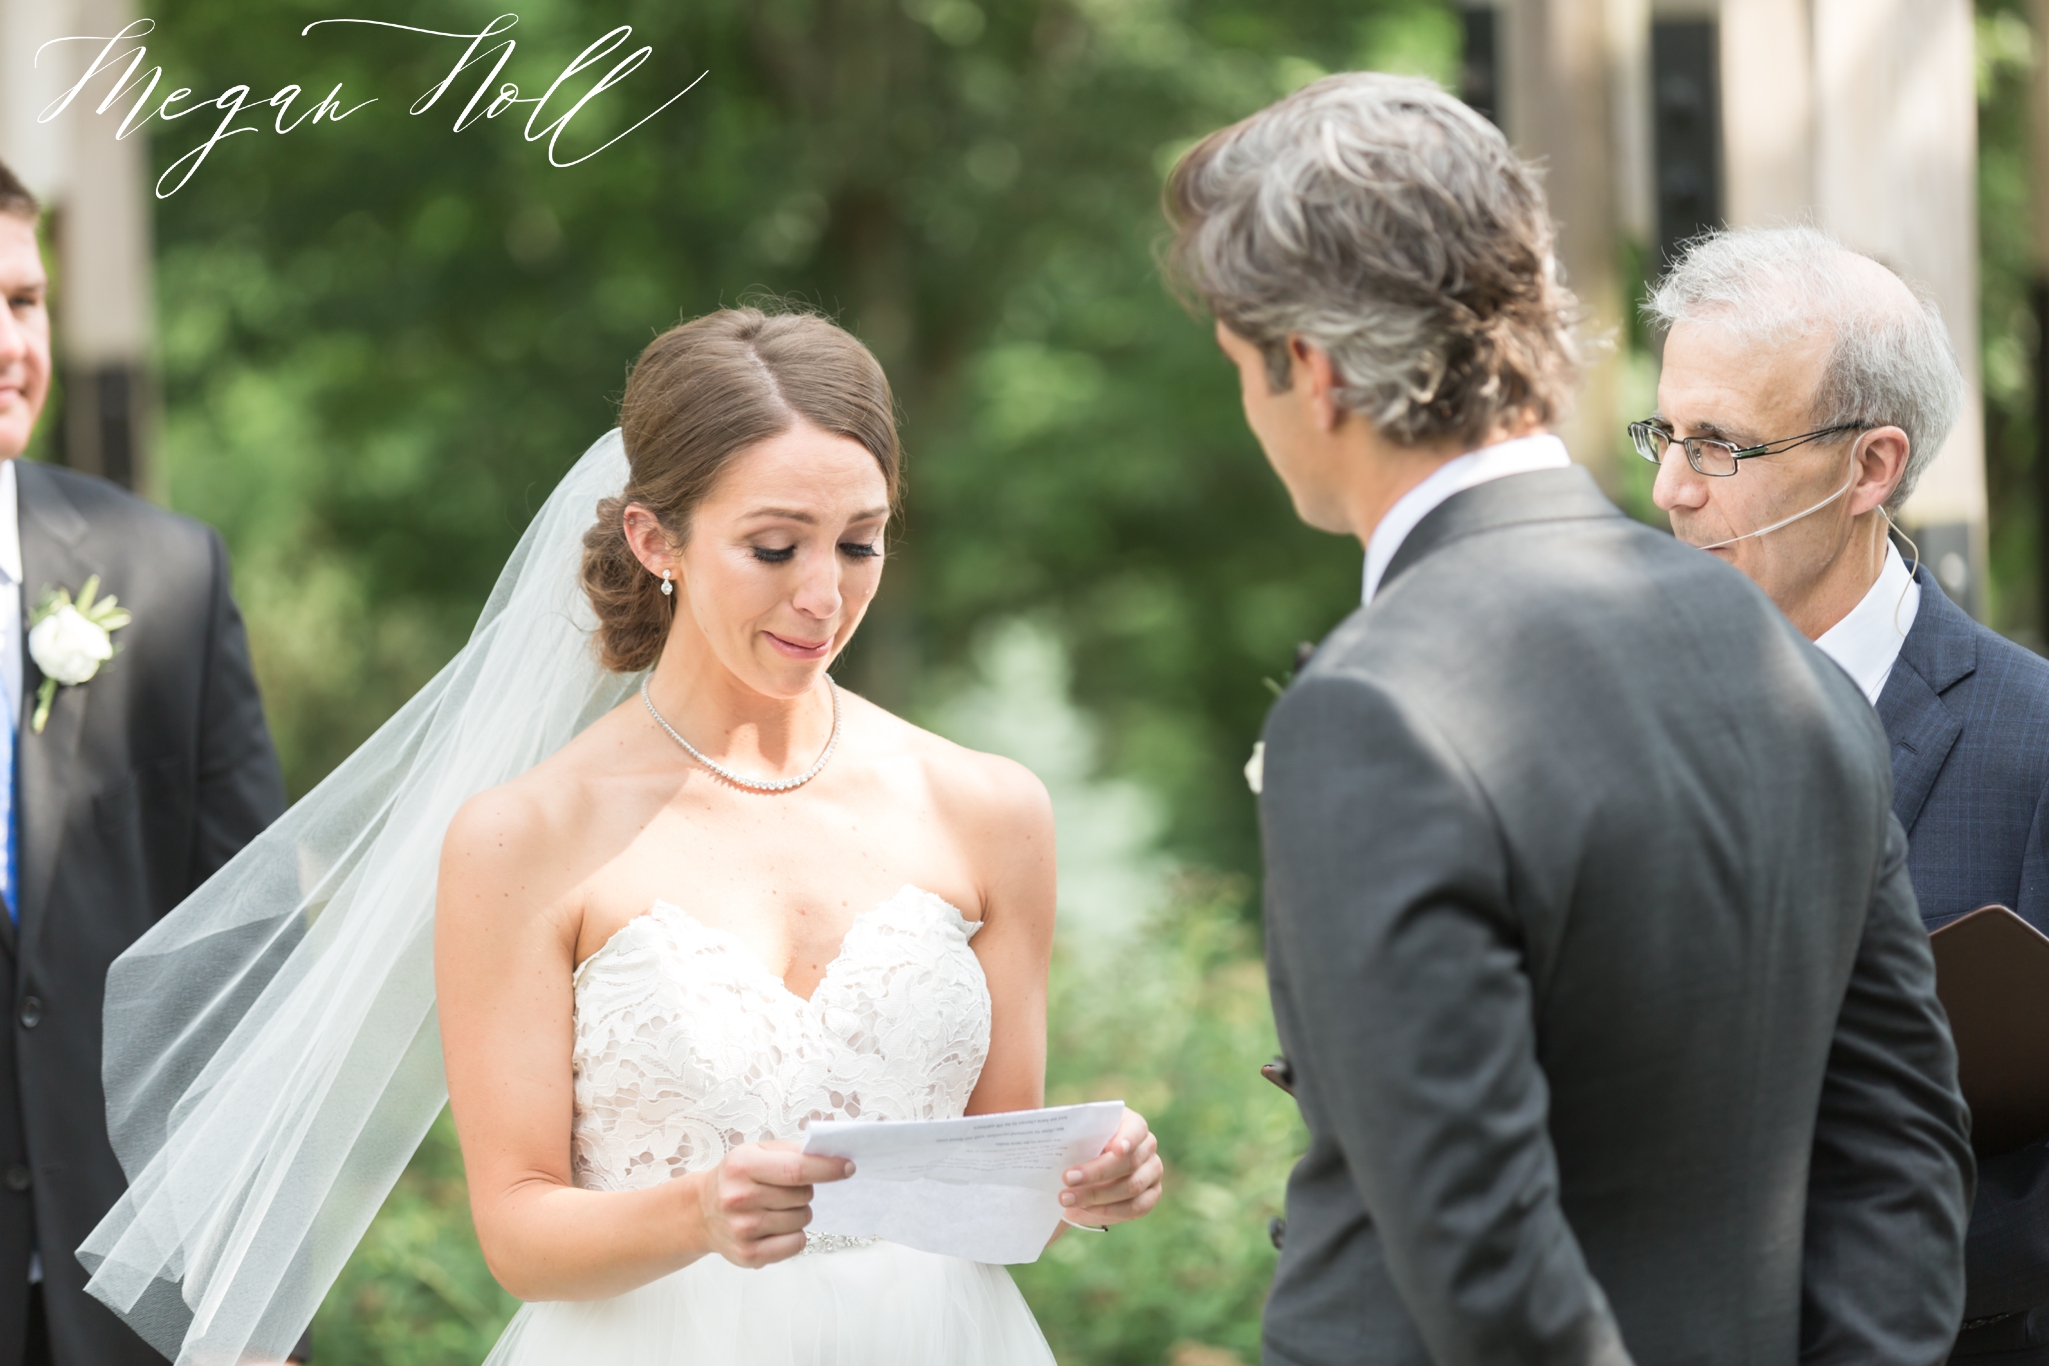 Samantha Koeninger reading vows to new husband